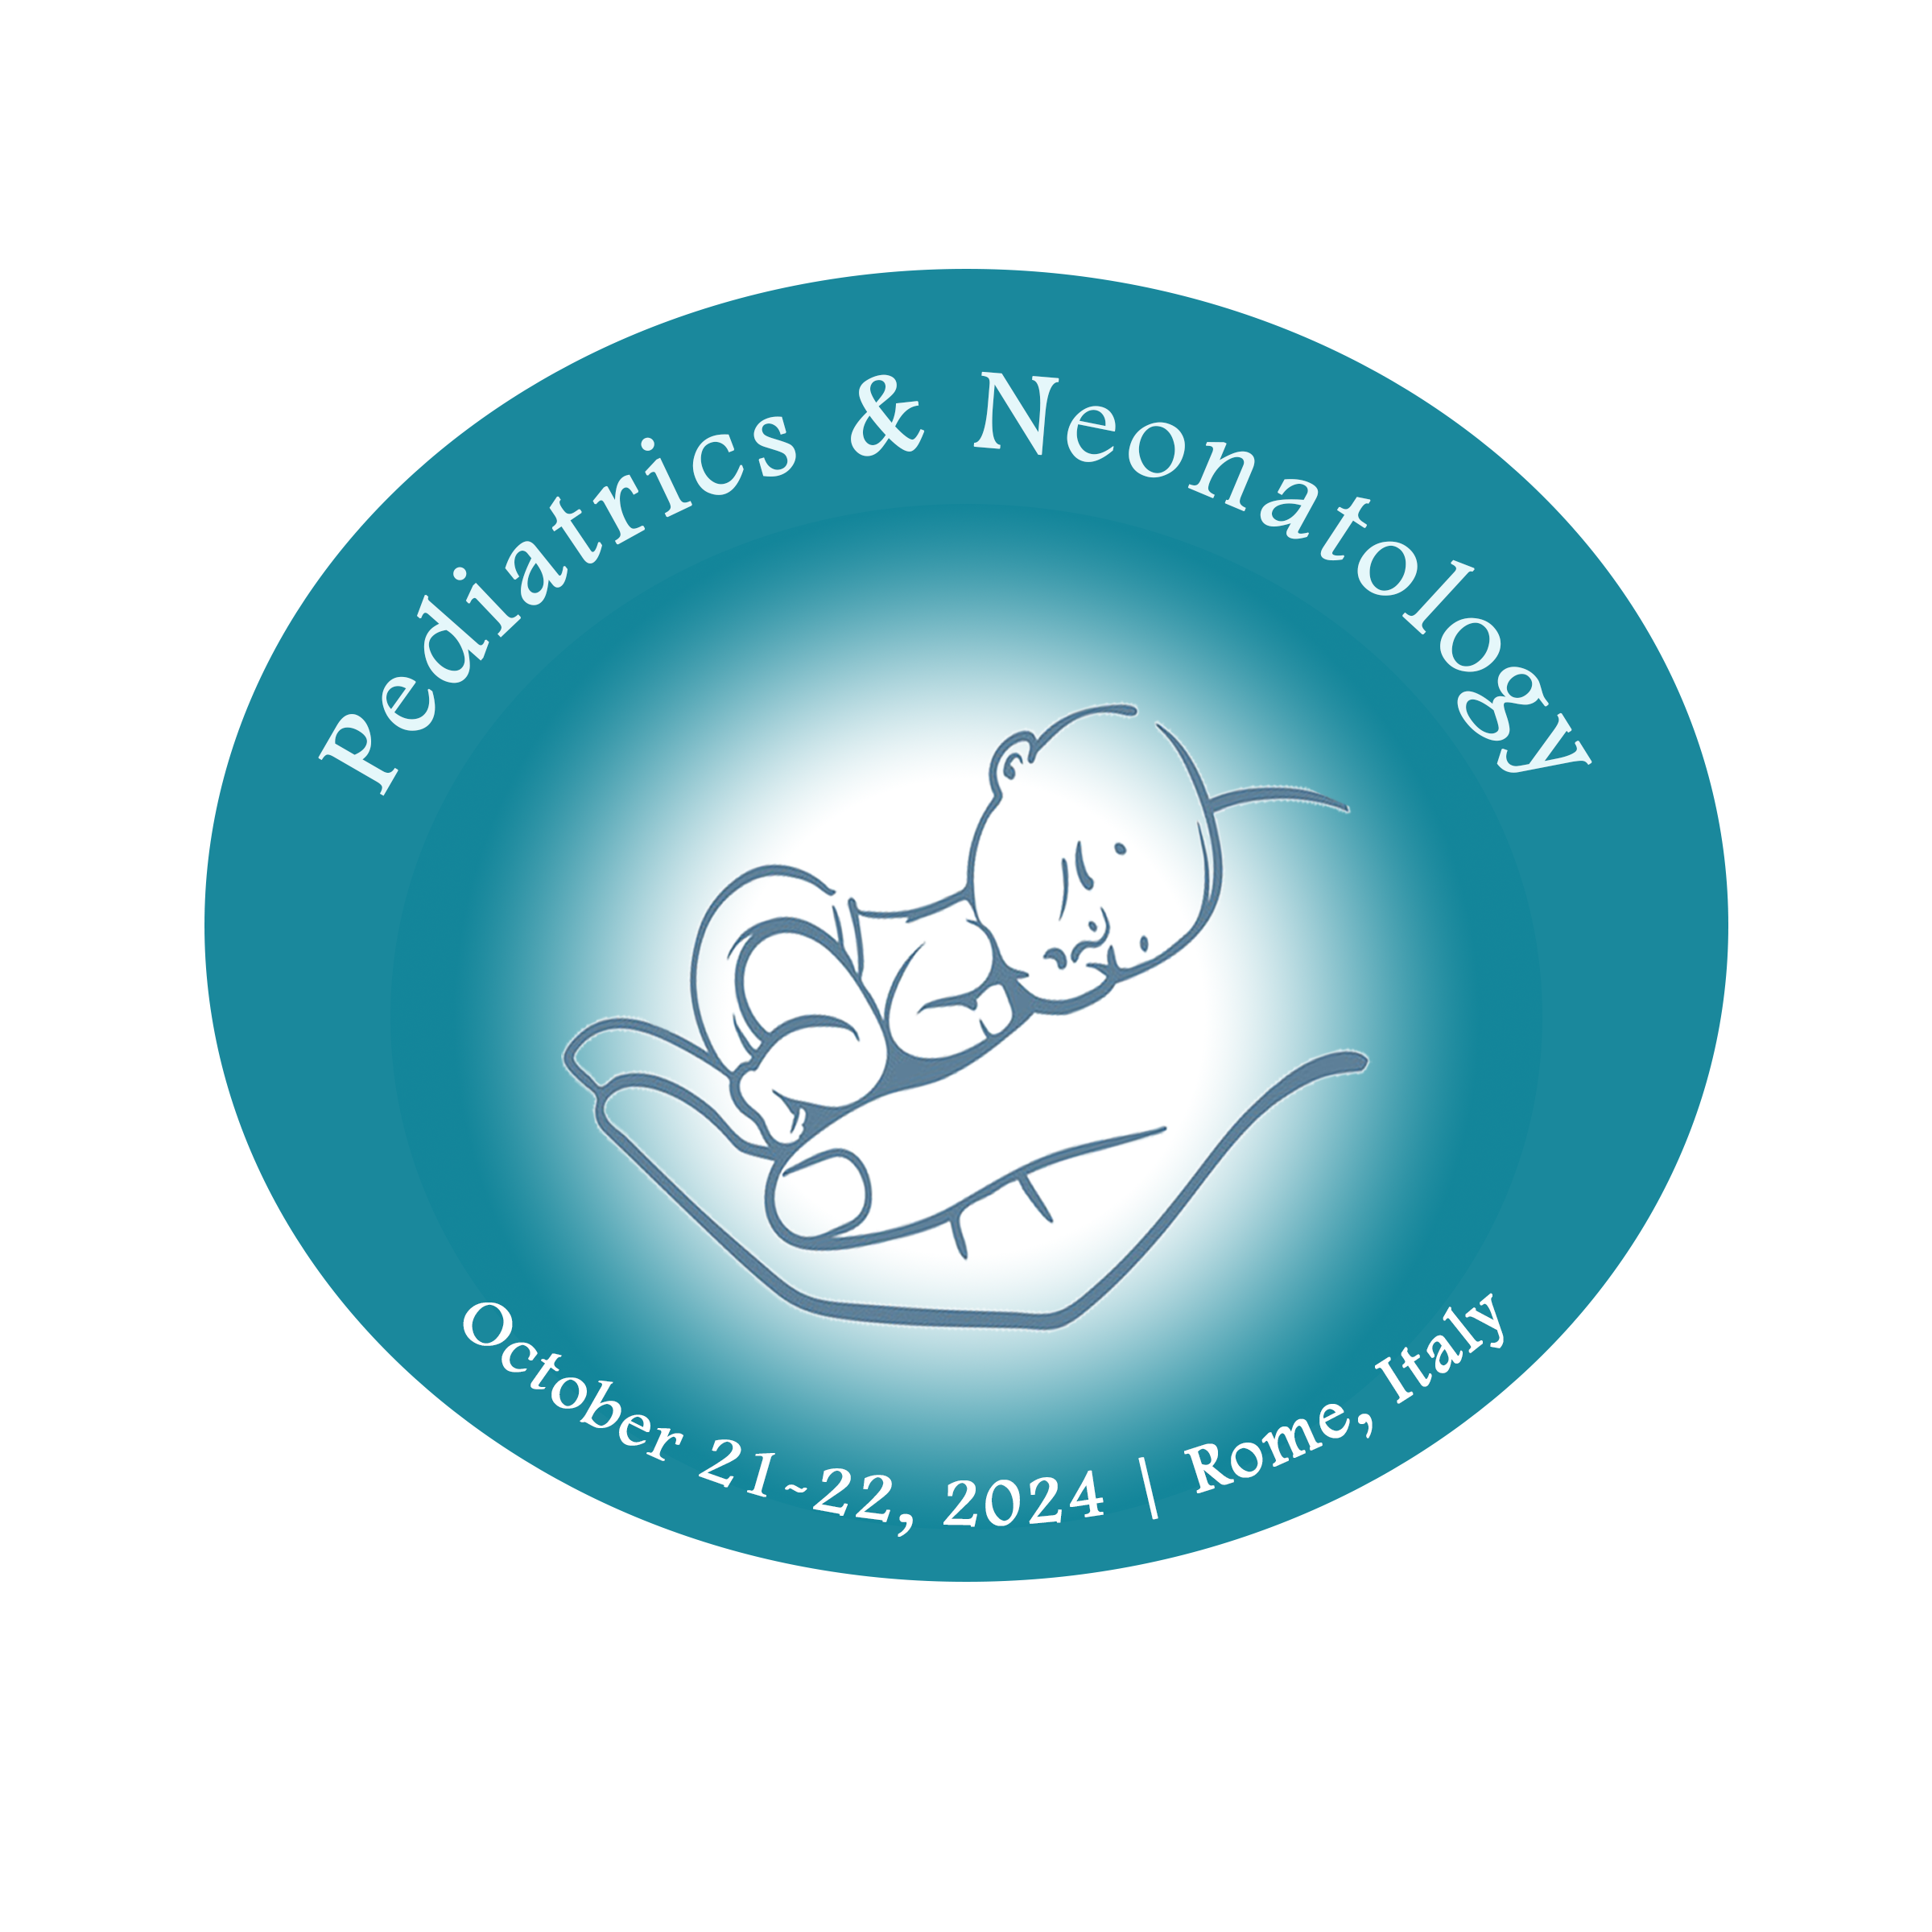 2nd International Conference on Pediatrics & Neonatology, Italy